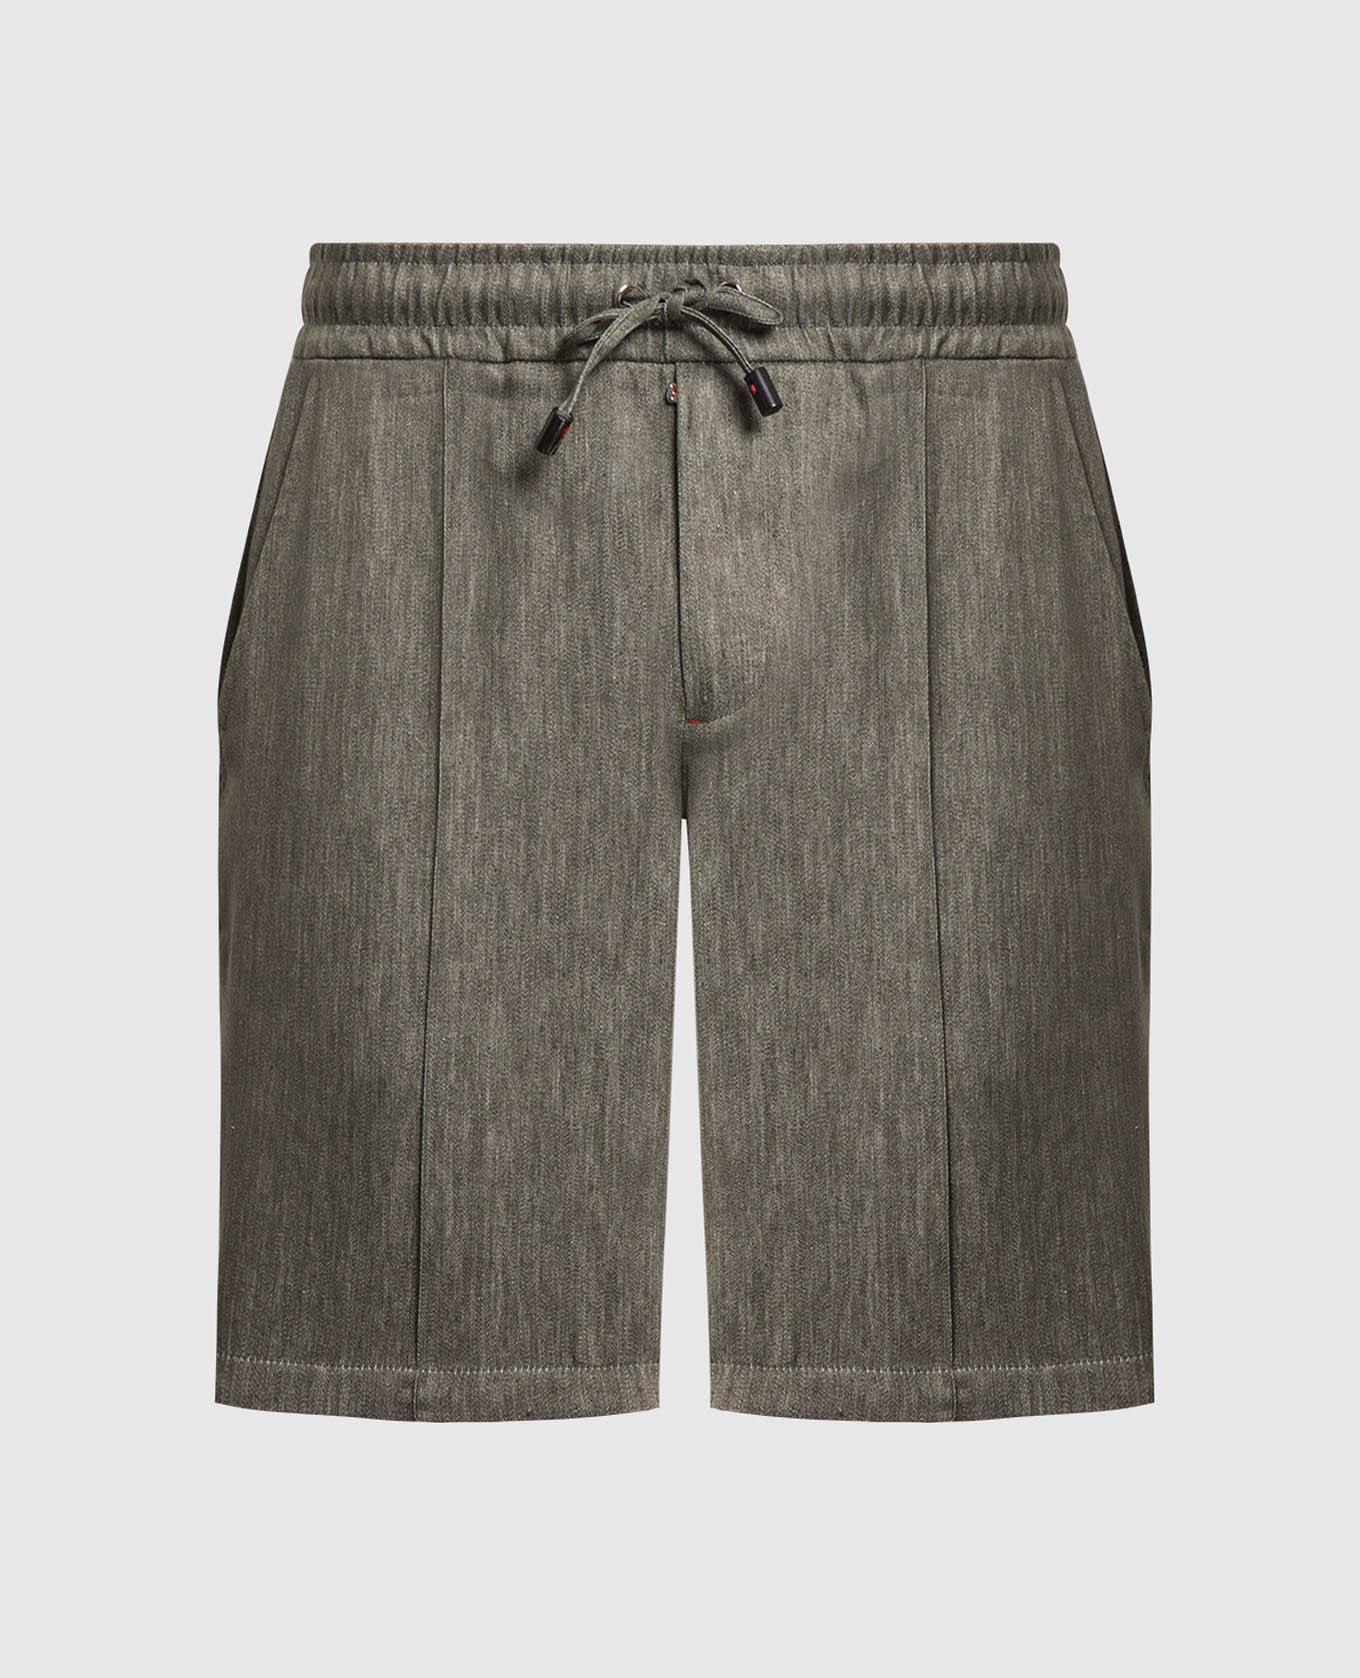 Khaki linen shorts